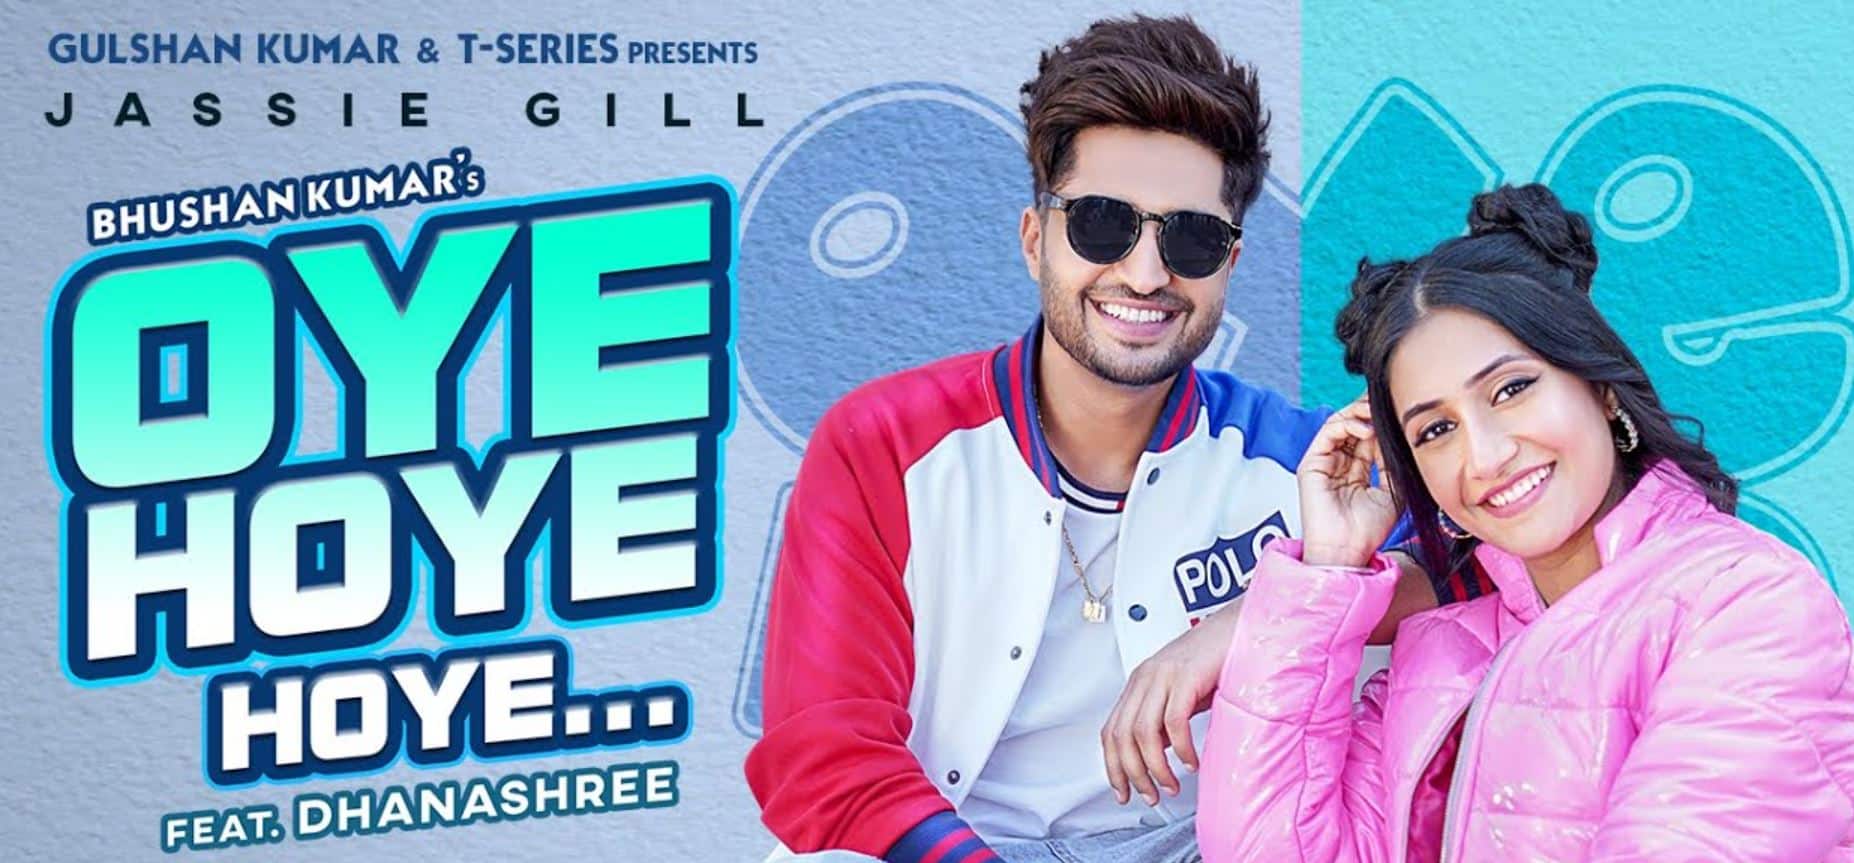 Oye Hoye Hoye Lyrics In Hindi – Jassi Gill, Simar Kaur